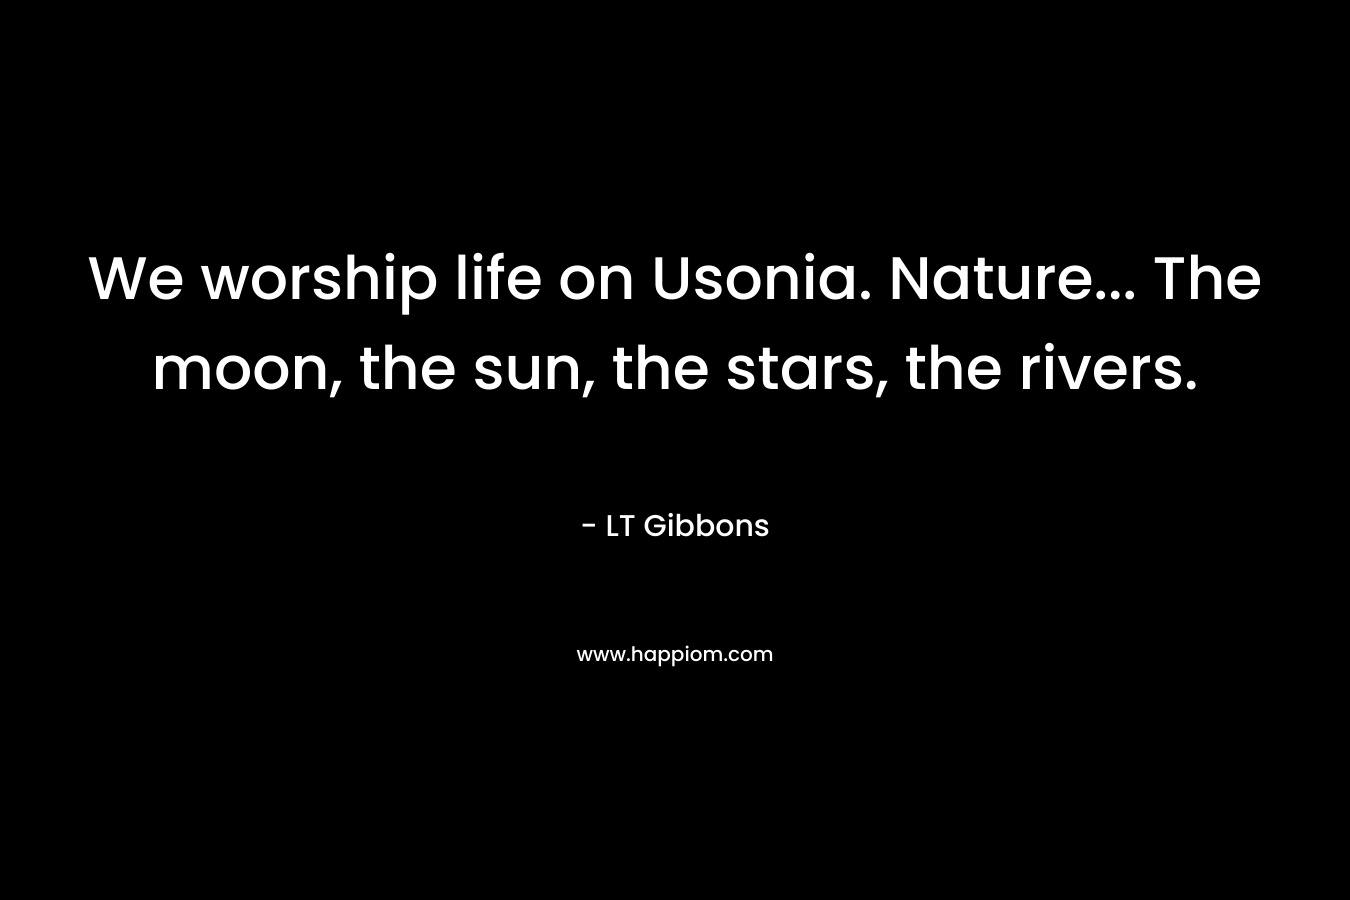 We worship life on Usonia. Nature... The moon, the sun, the stars, the rivers.